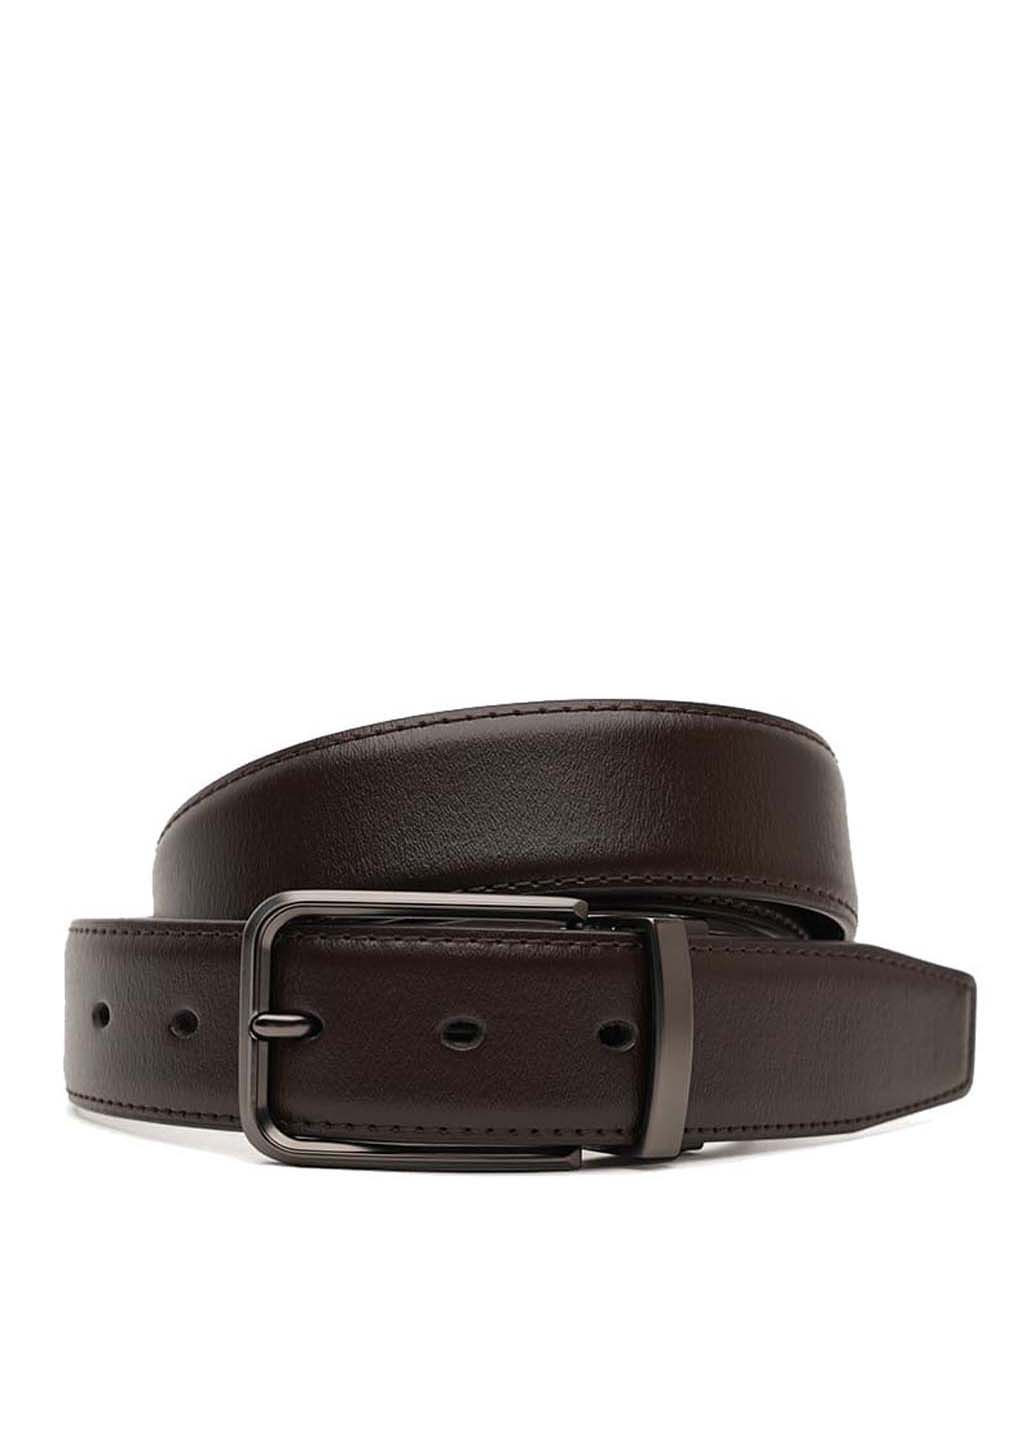 Ремень Borsa Leather v1dkx01-brown (285697082)